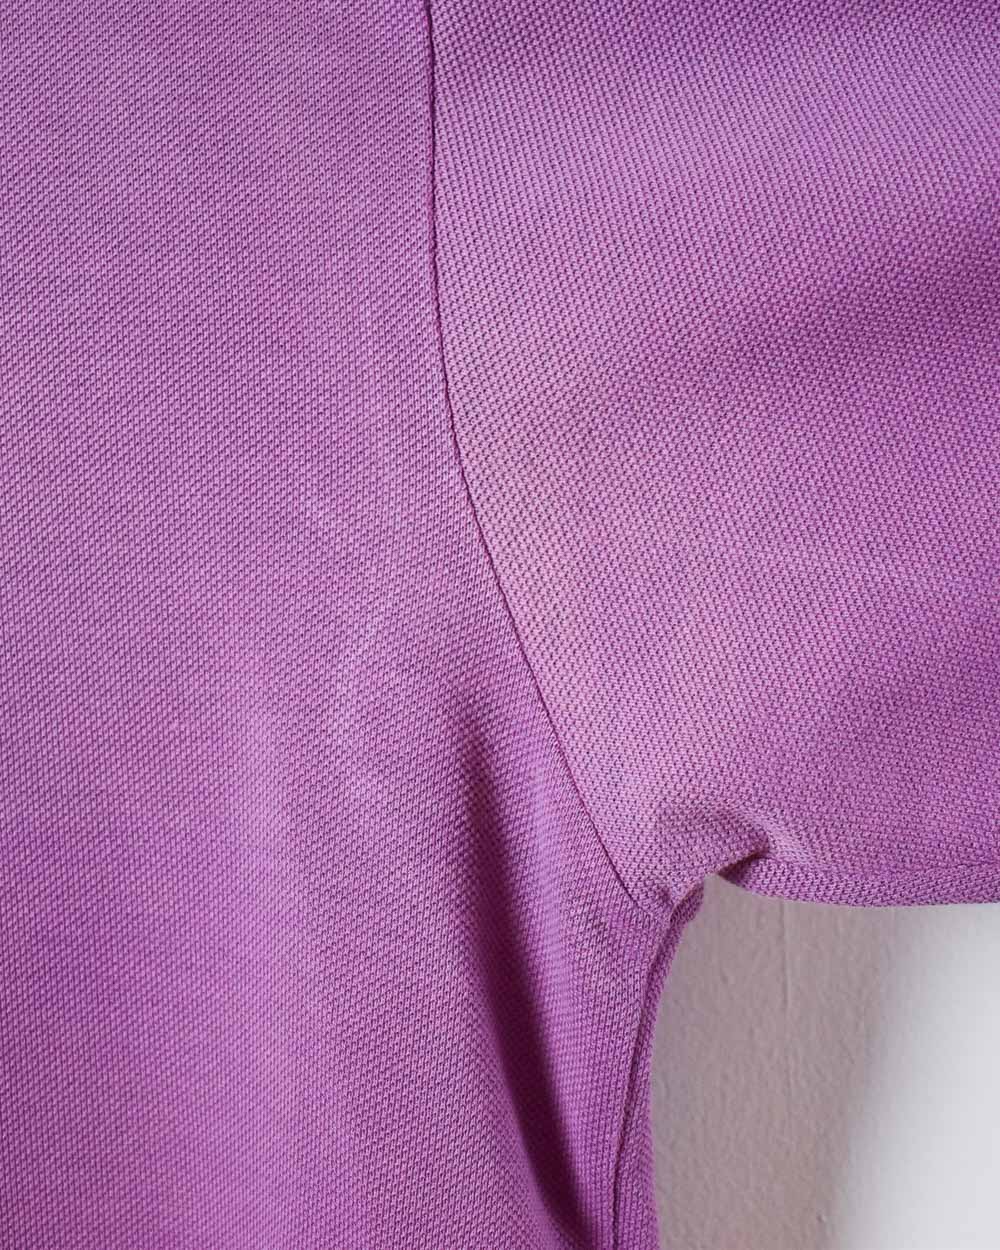 Purple Adidas Polo Shirt - Medium